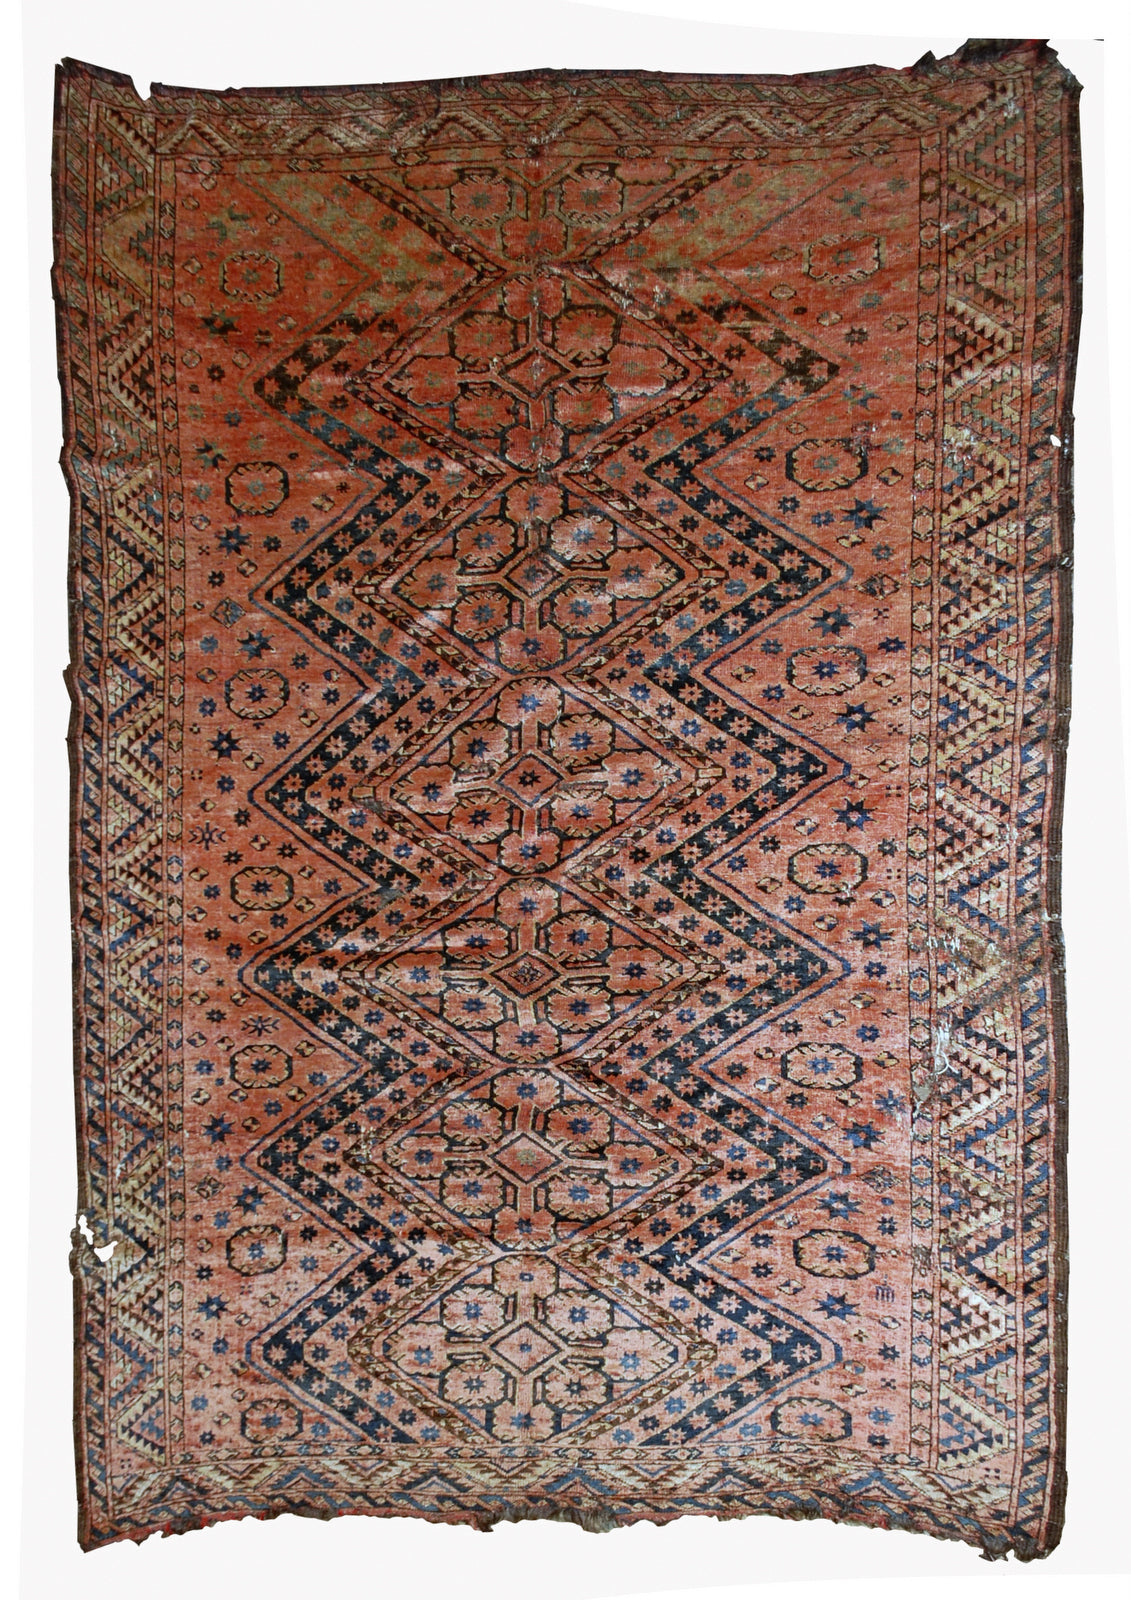 Handmade antique collectible Uzbek Beshir rug 1900s